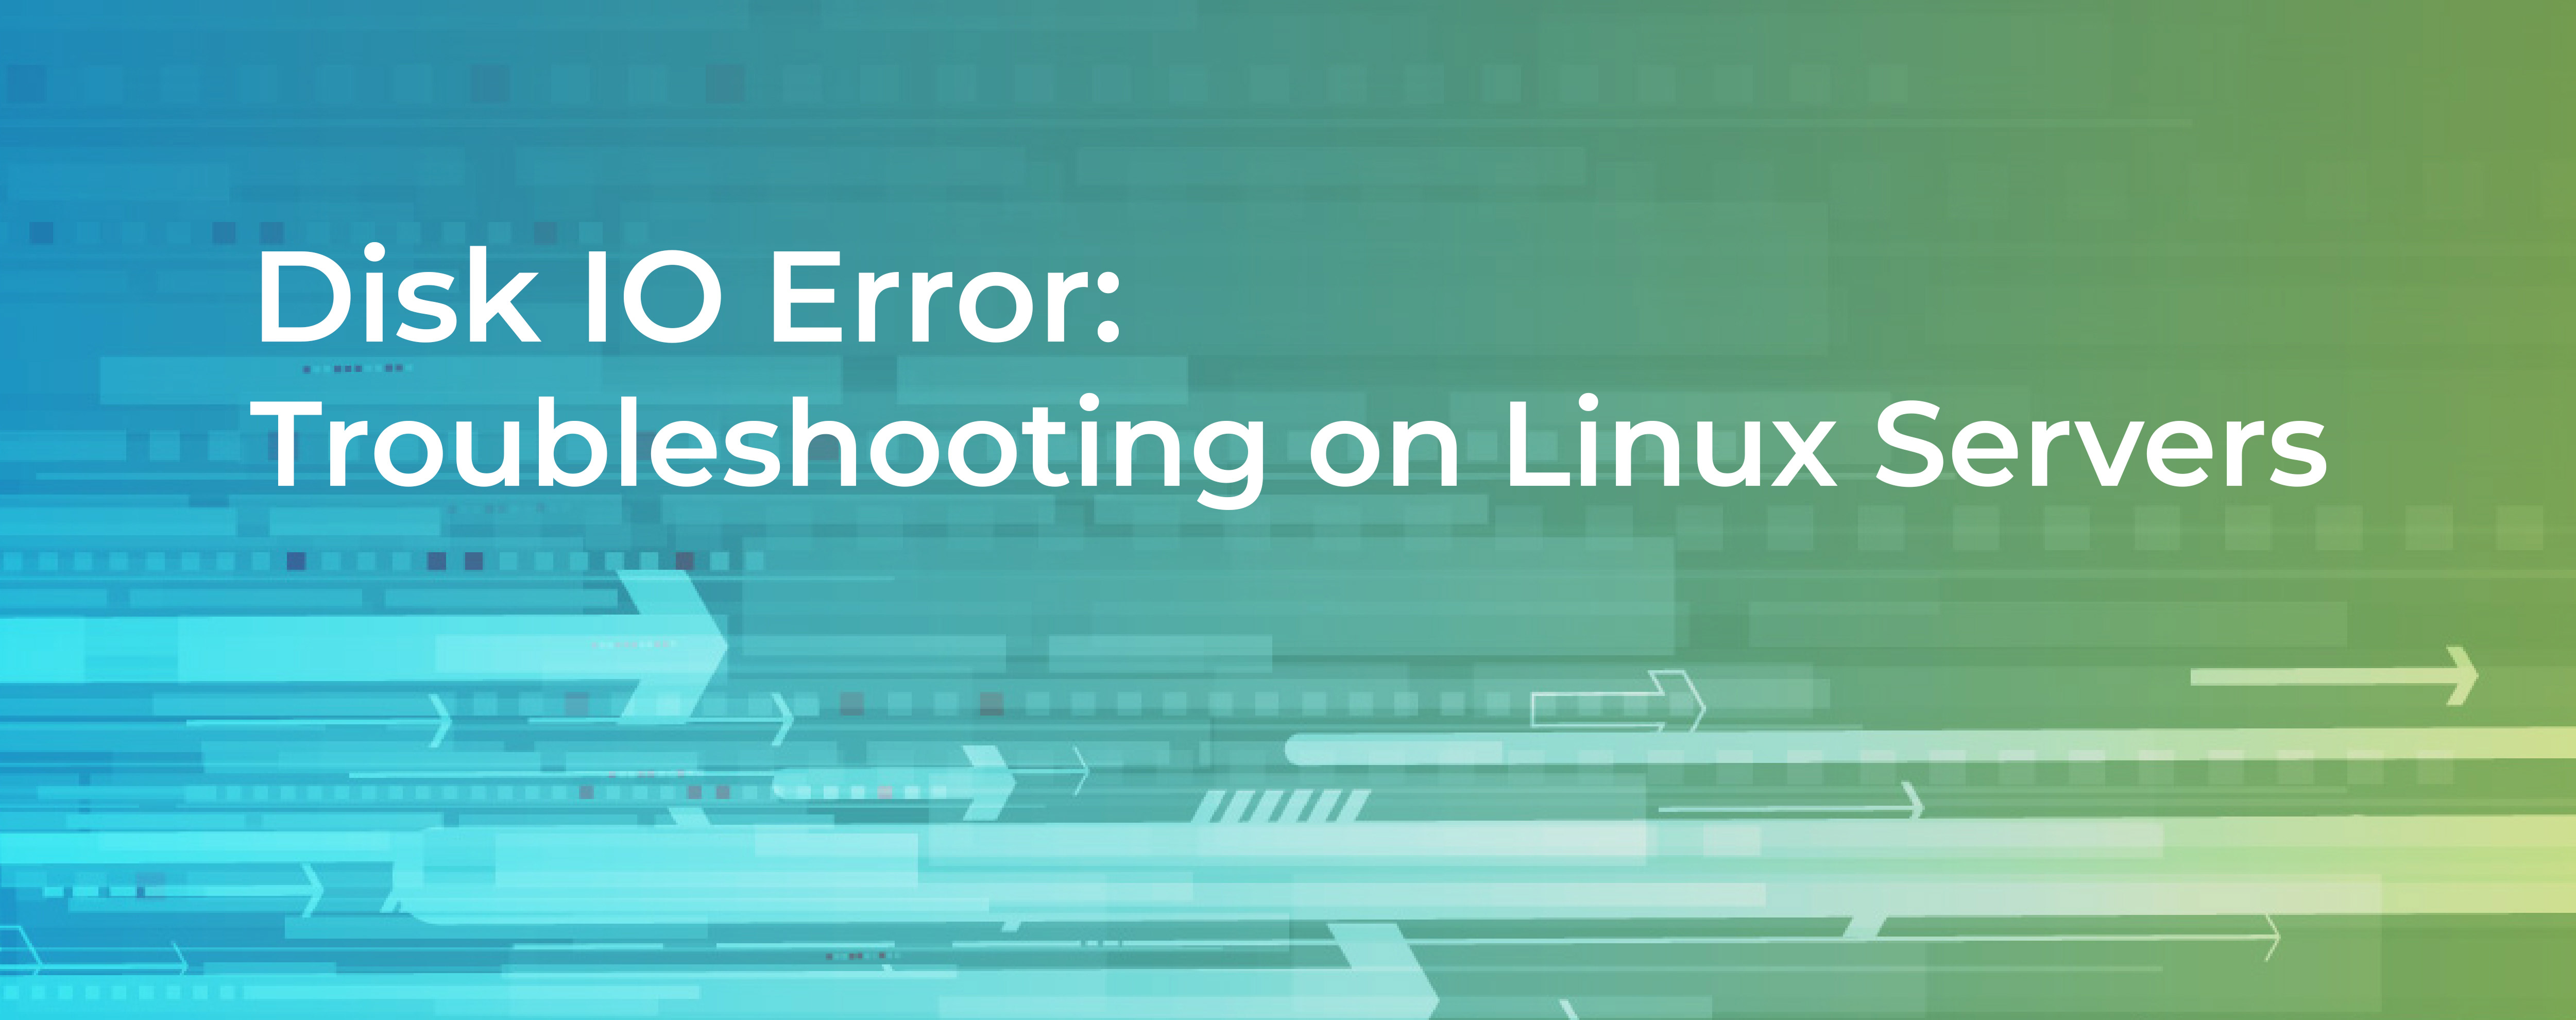 Fehlerbehebung bei langsamer Linux-Maschine